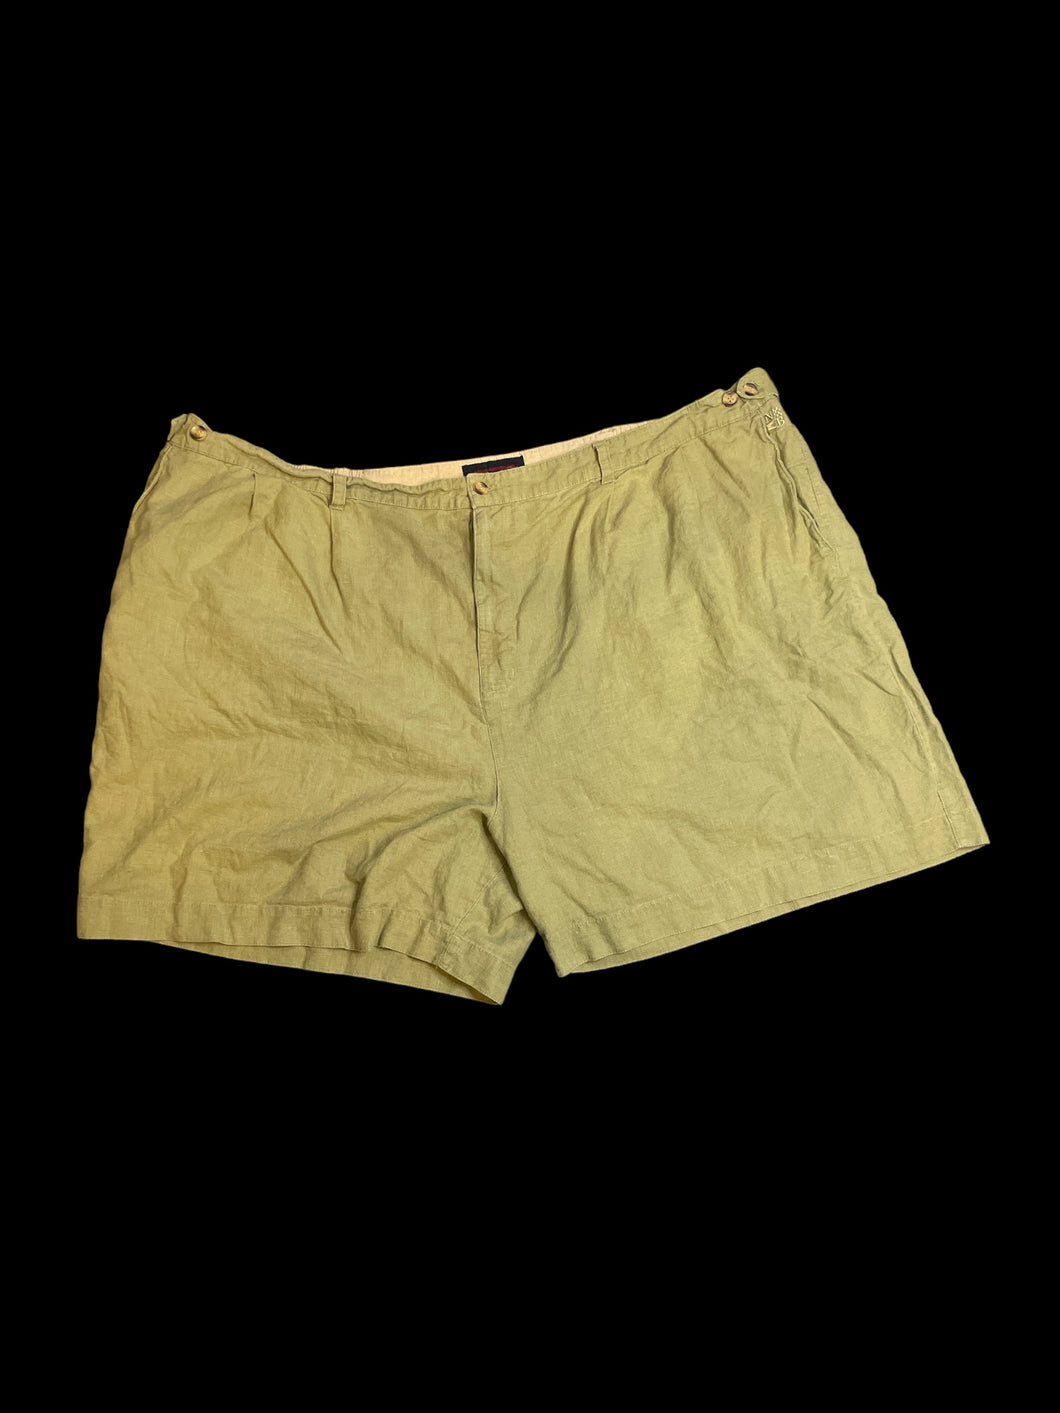 3X Vintage sage green linen/cotton blend shorts w/ elastic button adjustable waistband, pockets, belt loops, & button/zipper closure